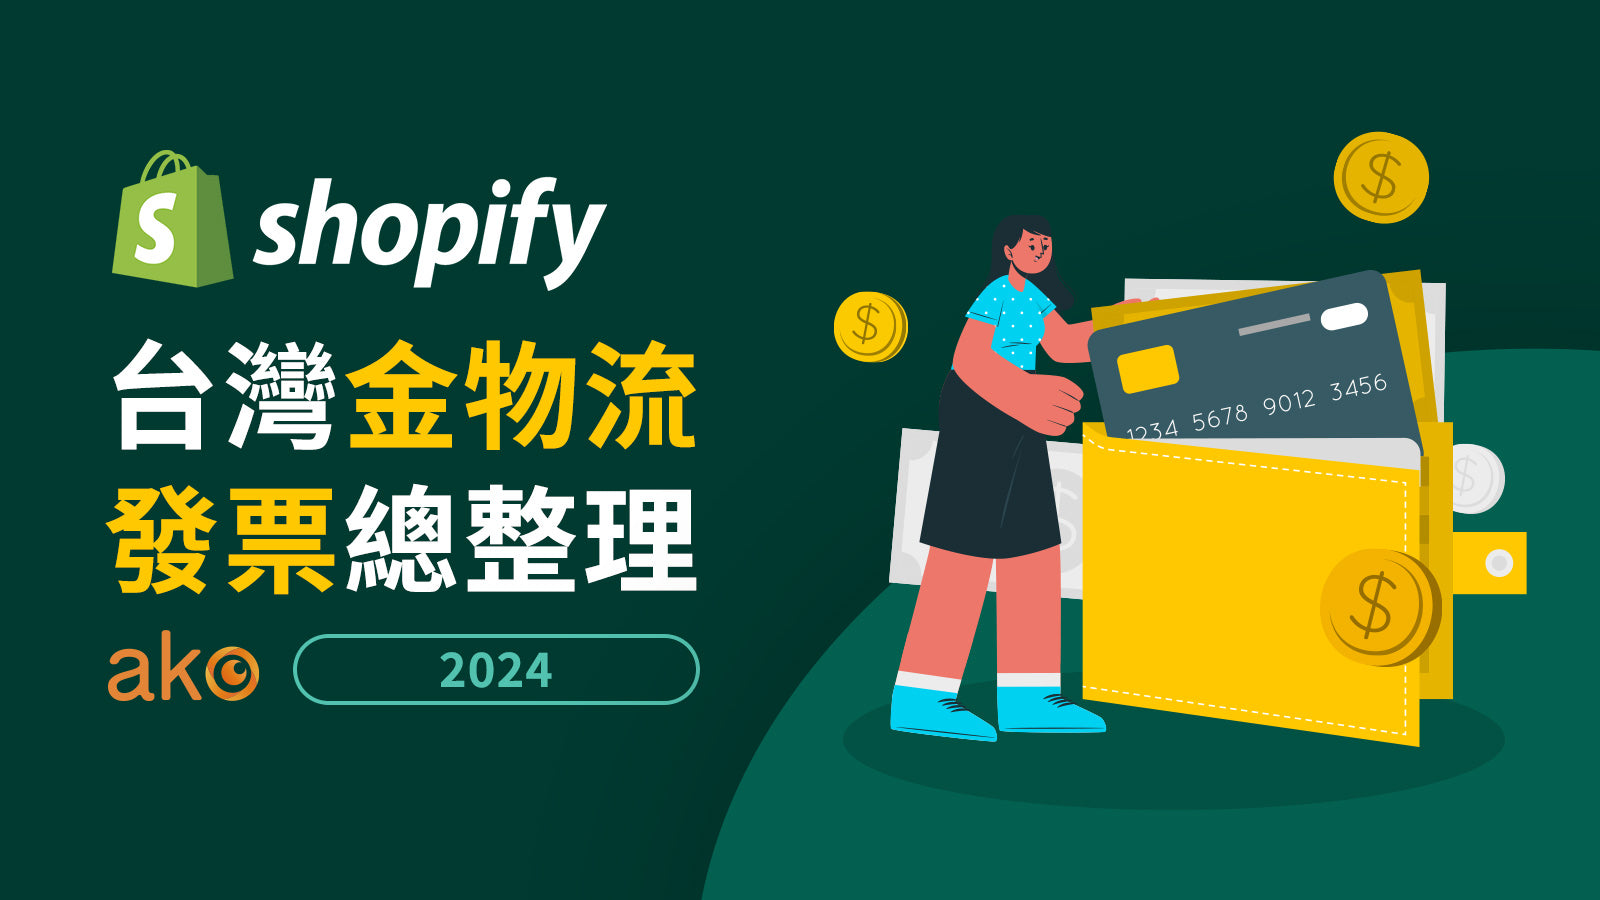 Shopify TW Logistics 2024